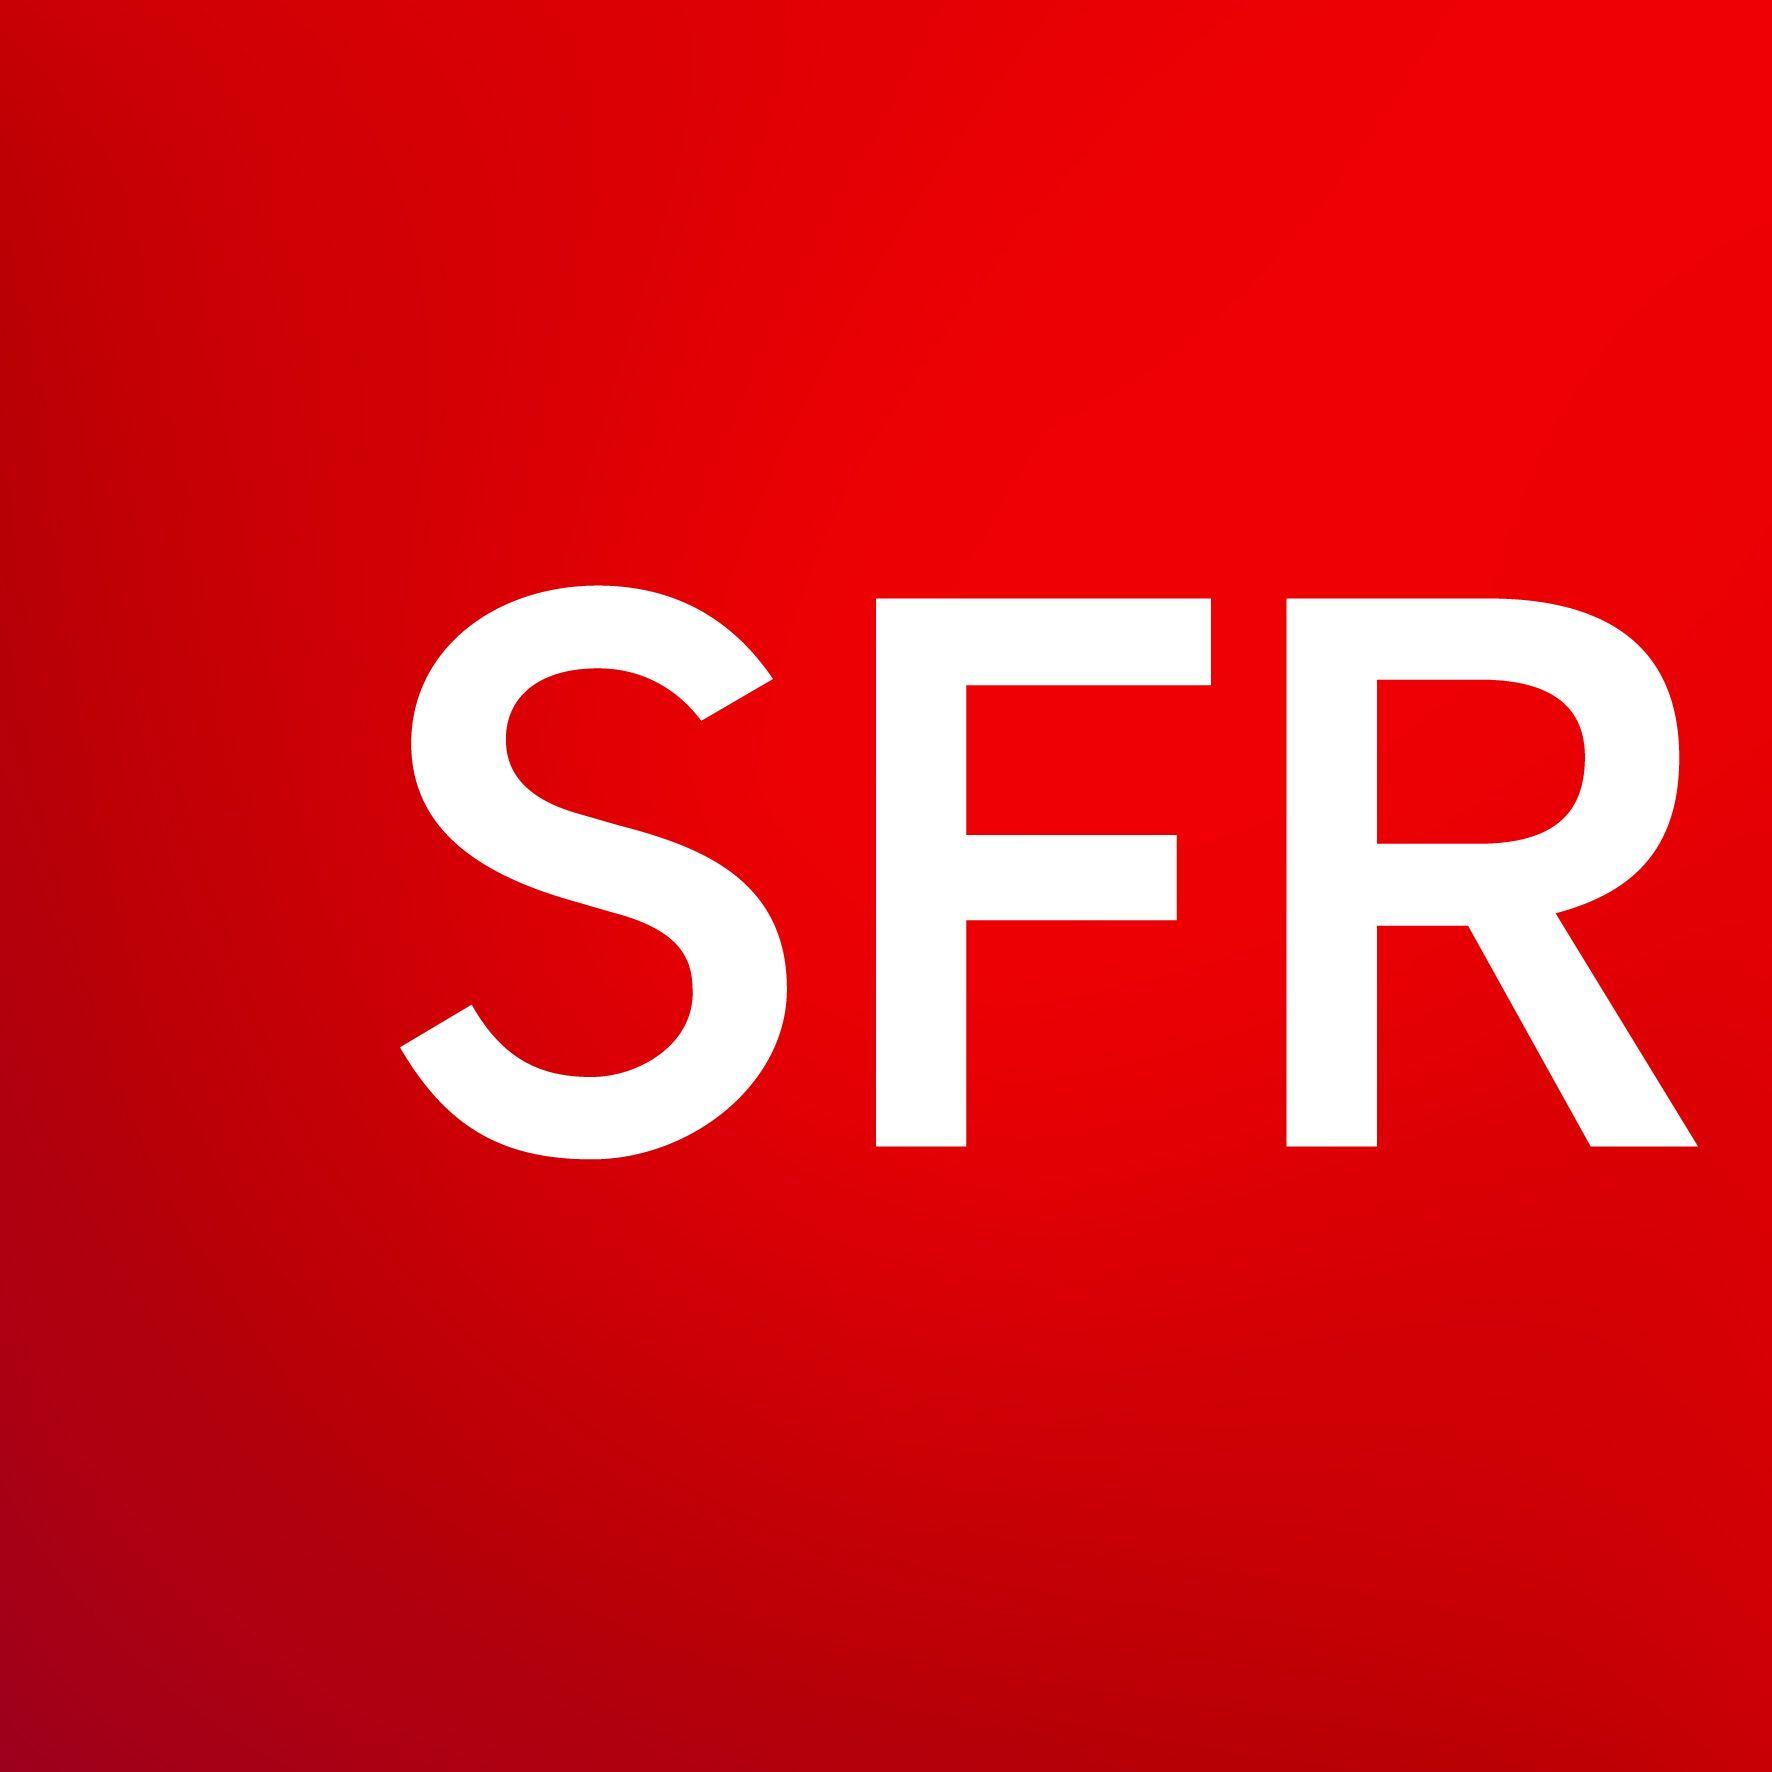 SFR Logo - File:SFR logo 2014.jpg - Wikimedia Commons